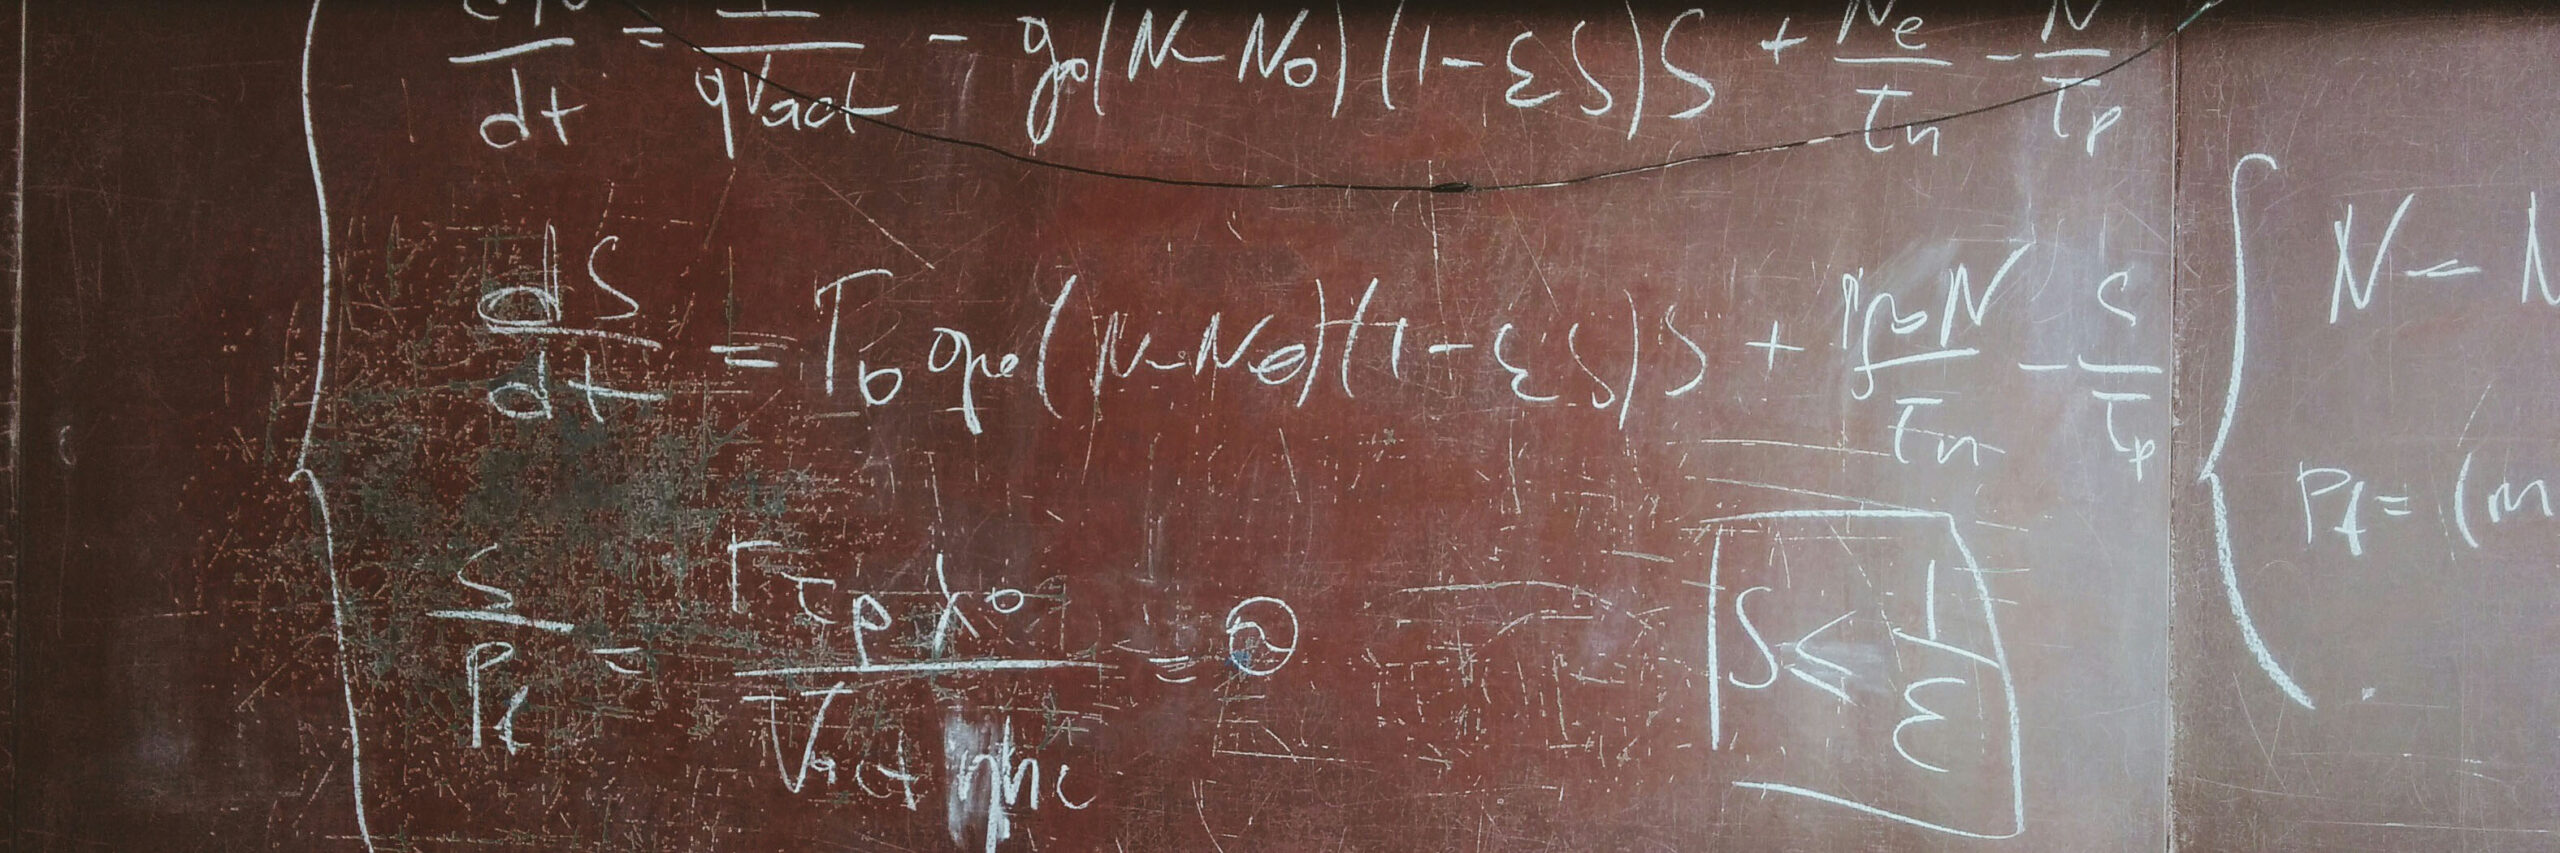 formulas on blackboard banner